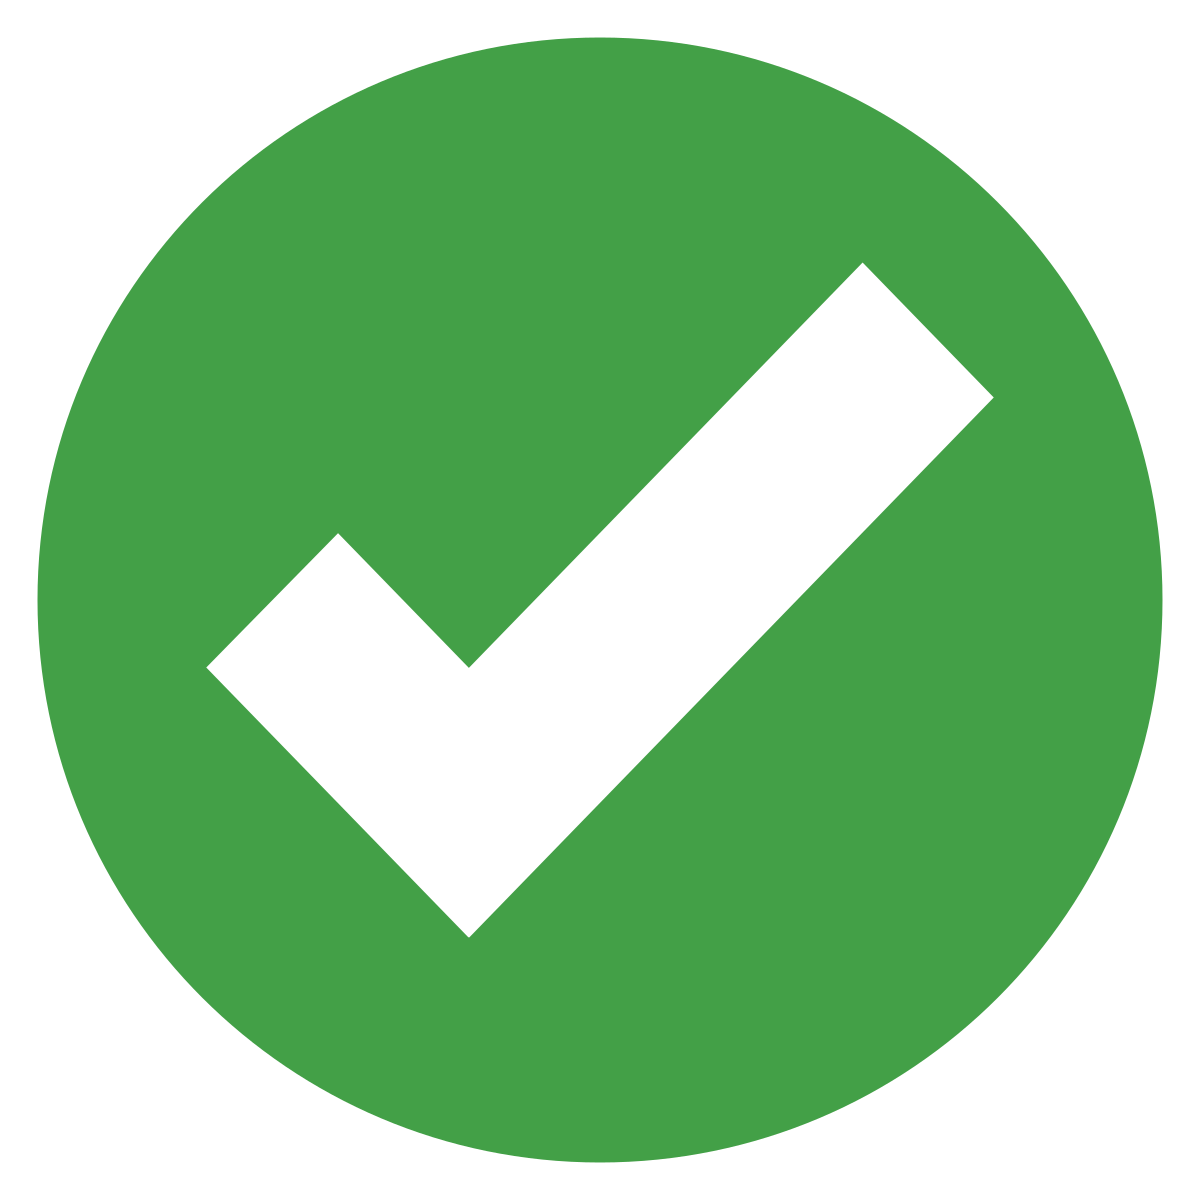 Green checkmark indicating safety